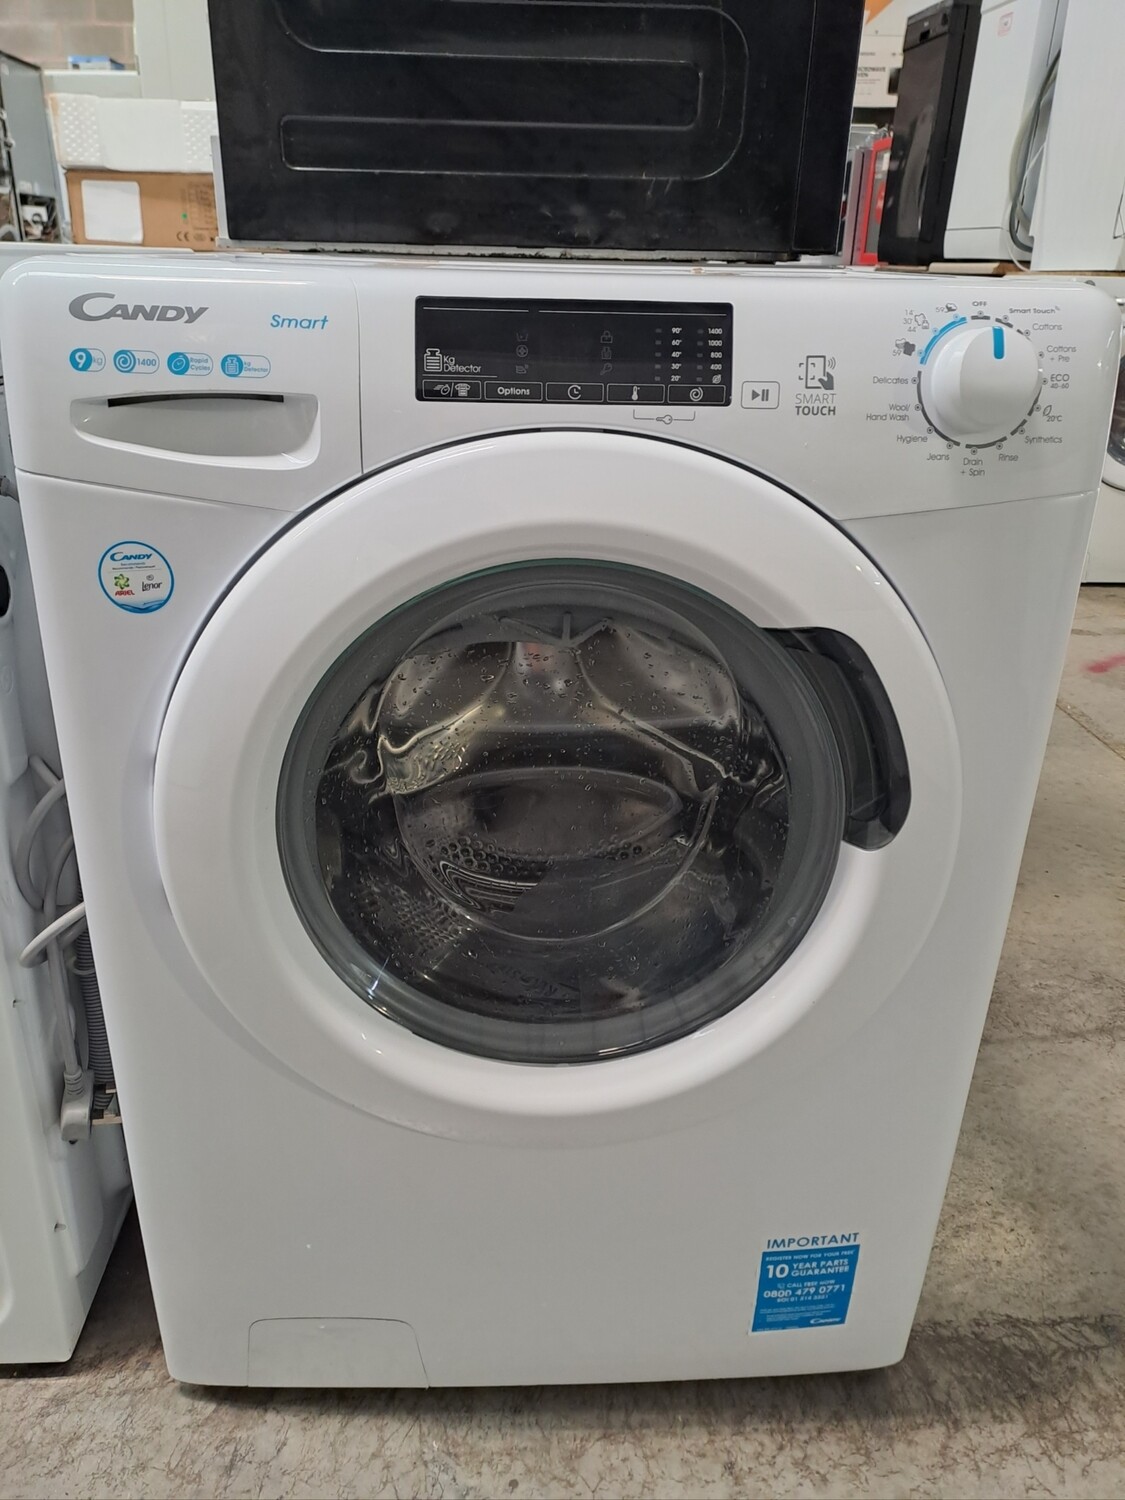 Candy CS149TE-80 9kg Load 1400 Spin Washing Machine - White - Brand New - 12 Month Guarantee